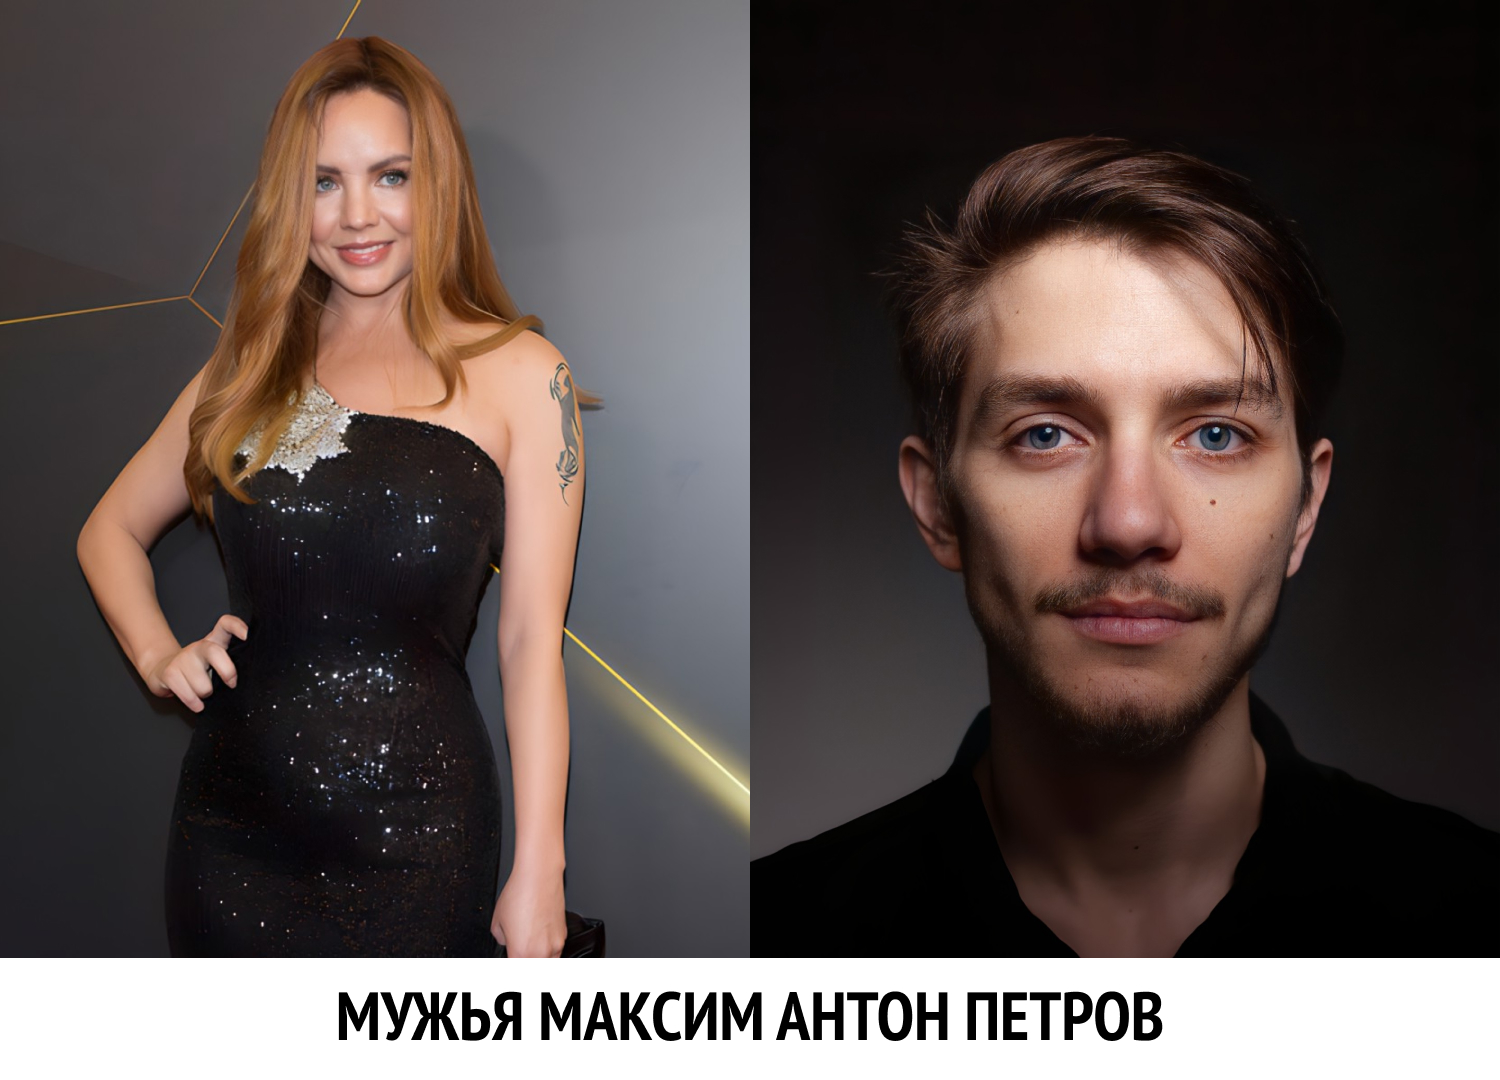 muzhya-Maksim-anton-petrov (20).jpg